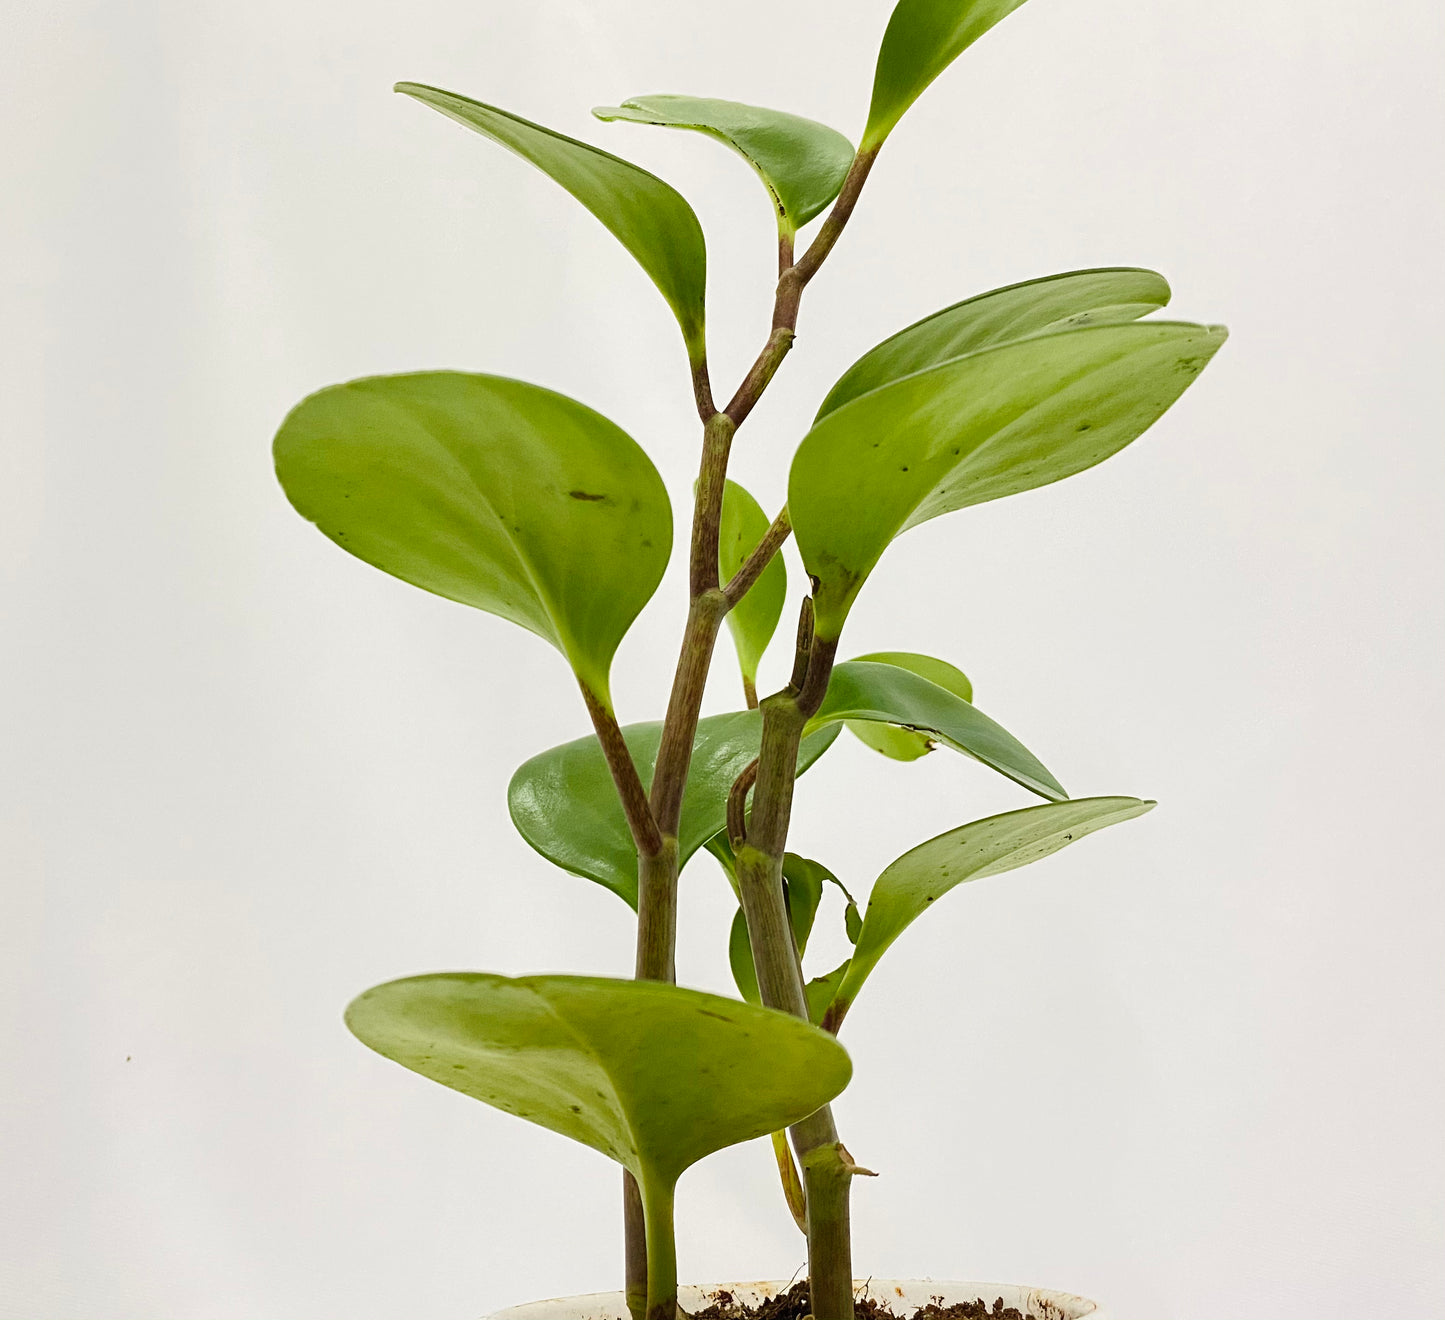 Peperomia Green (Single Plant)